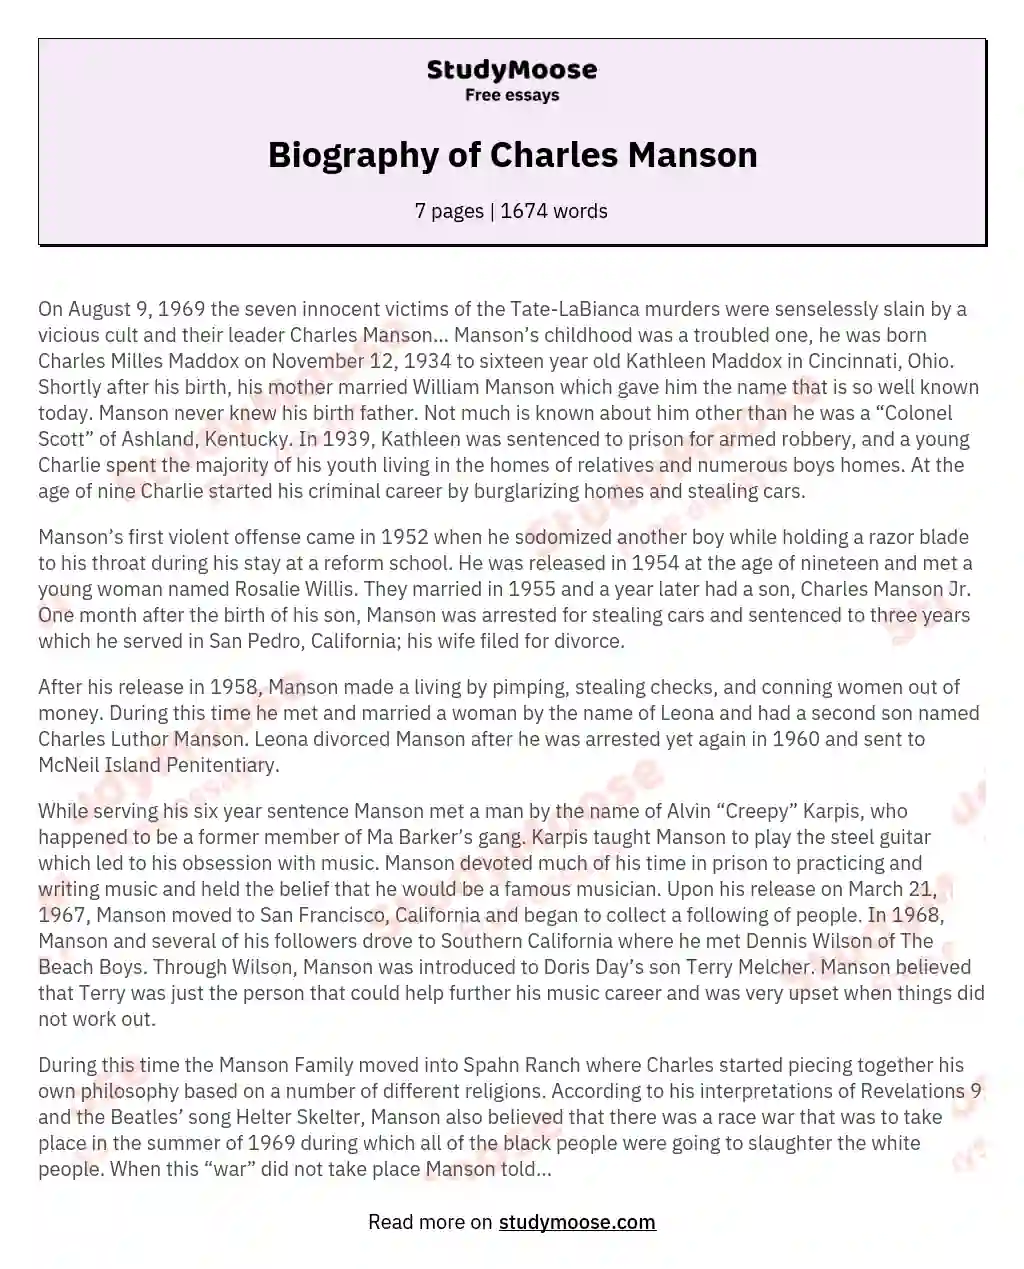 Biography of Charles Manson